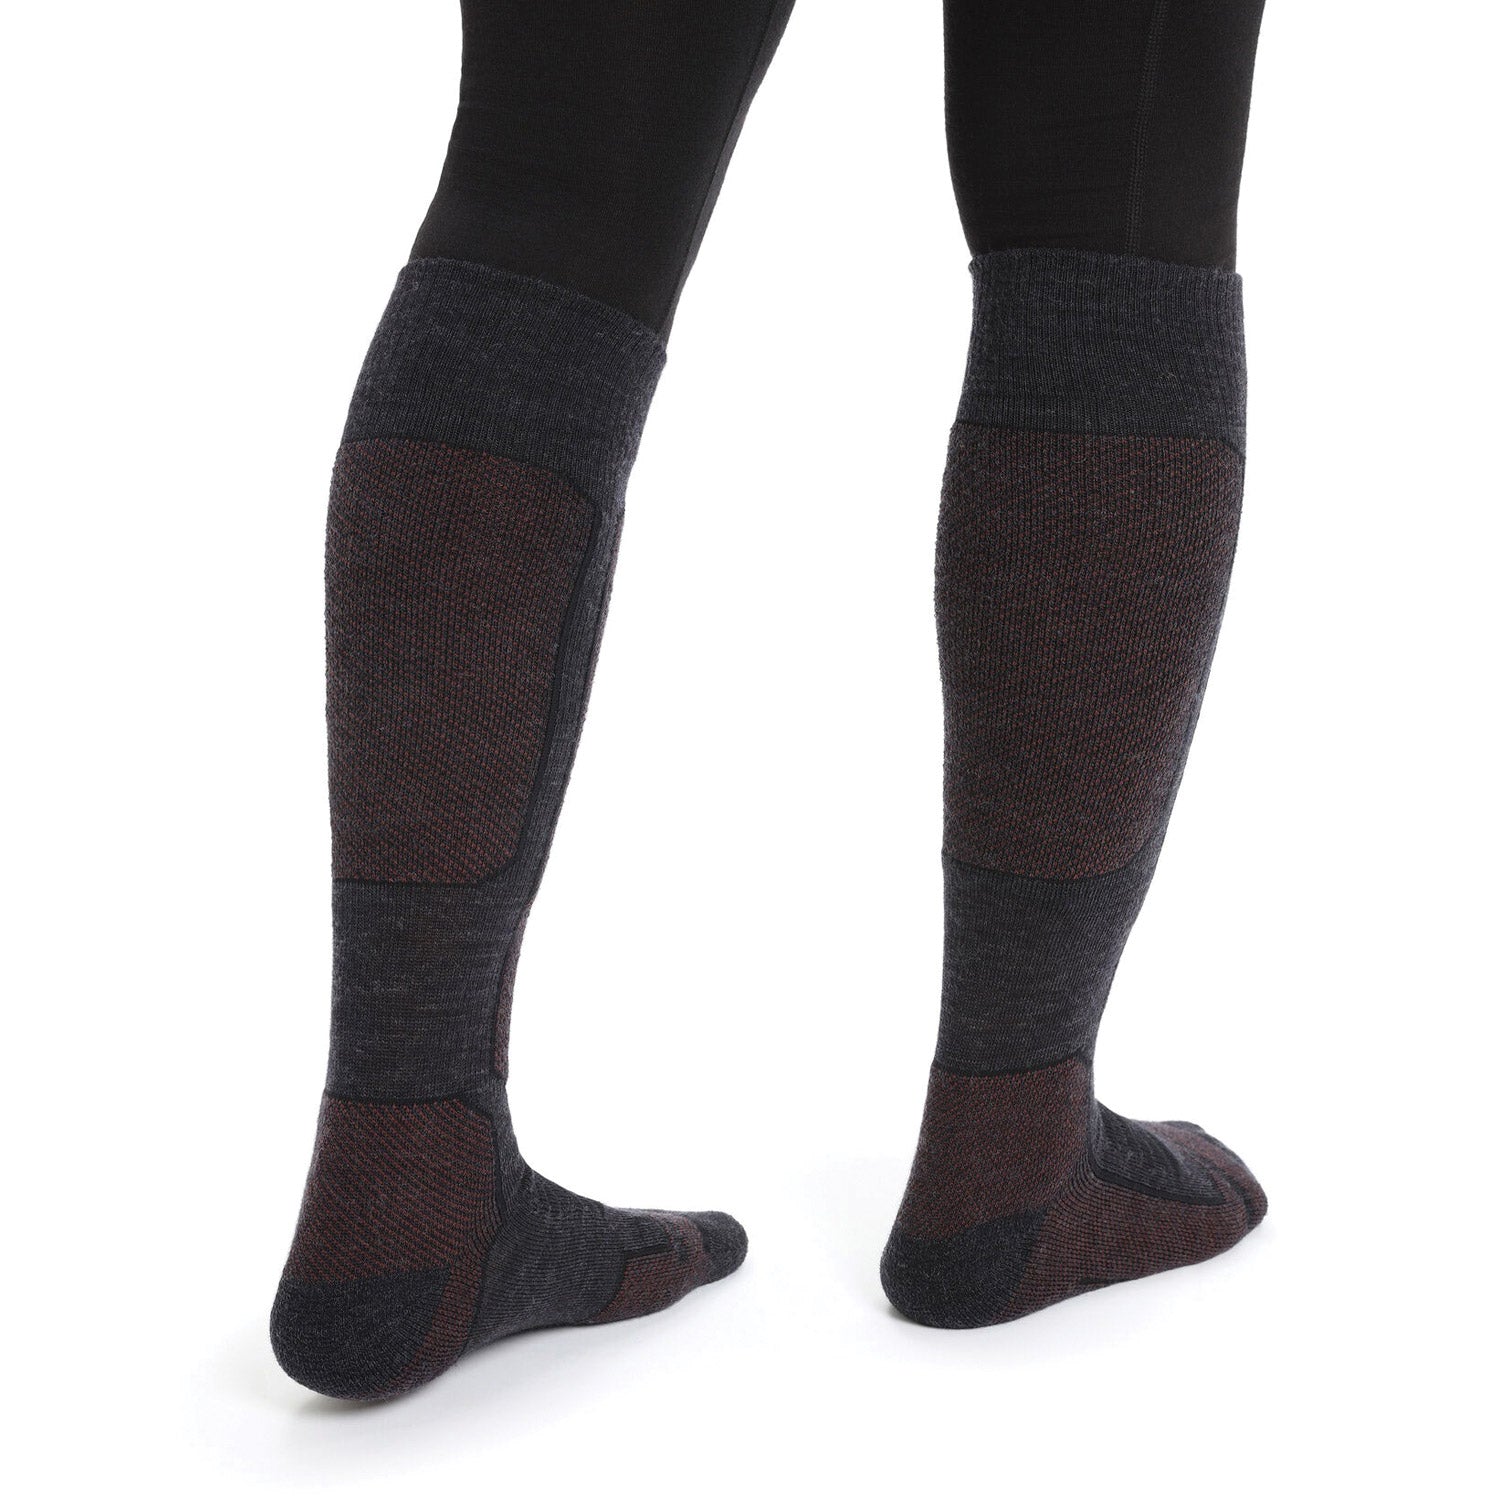 Women's Merino Ski+ Medium Over the Calf Socks